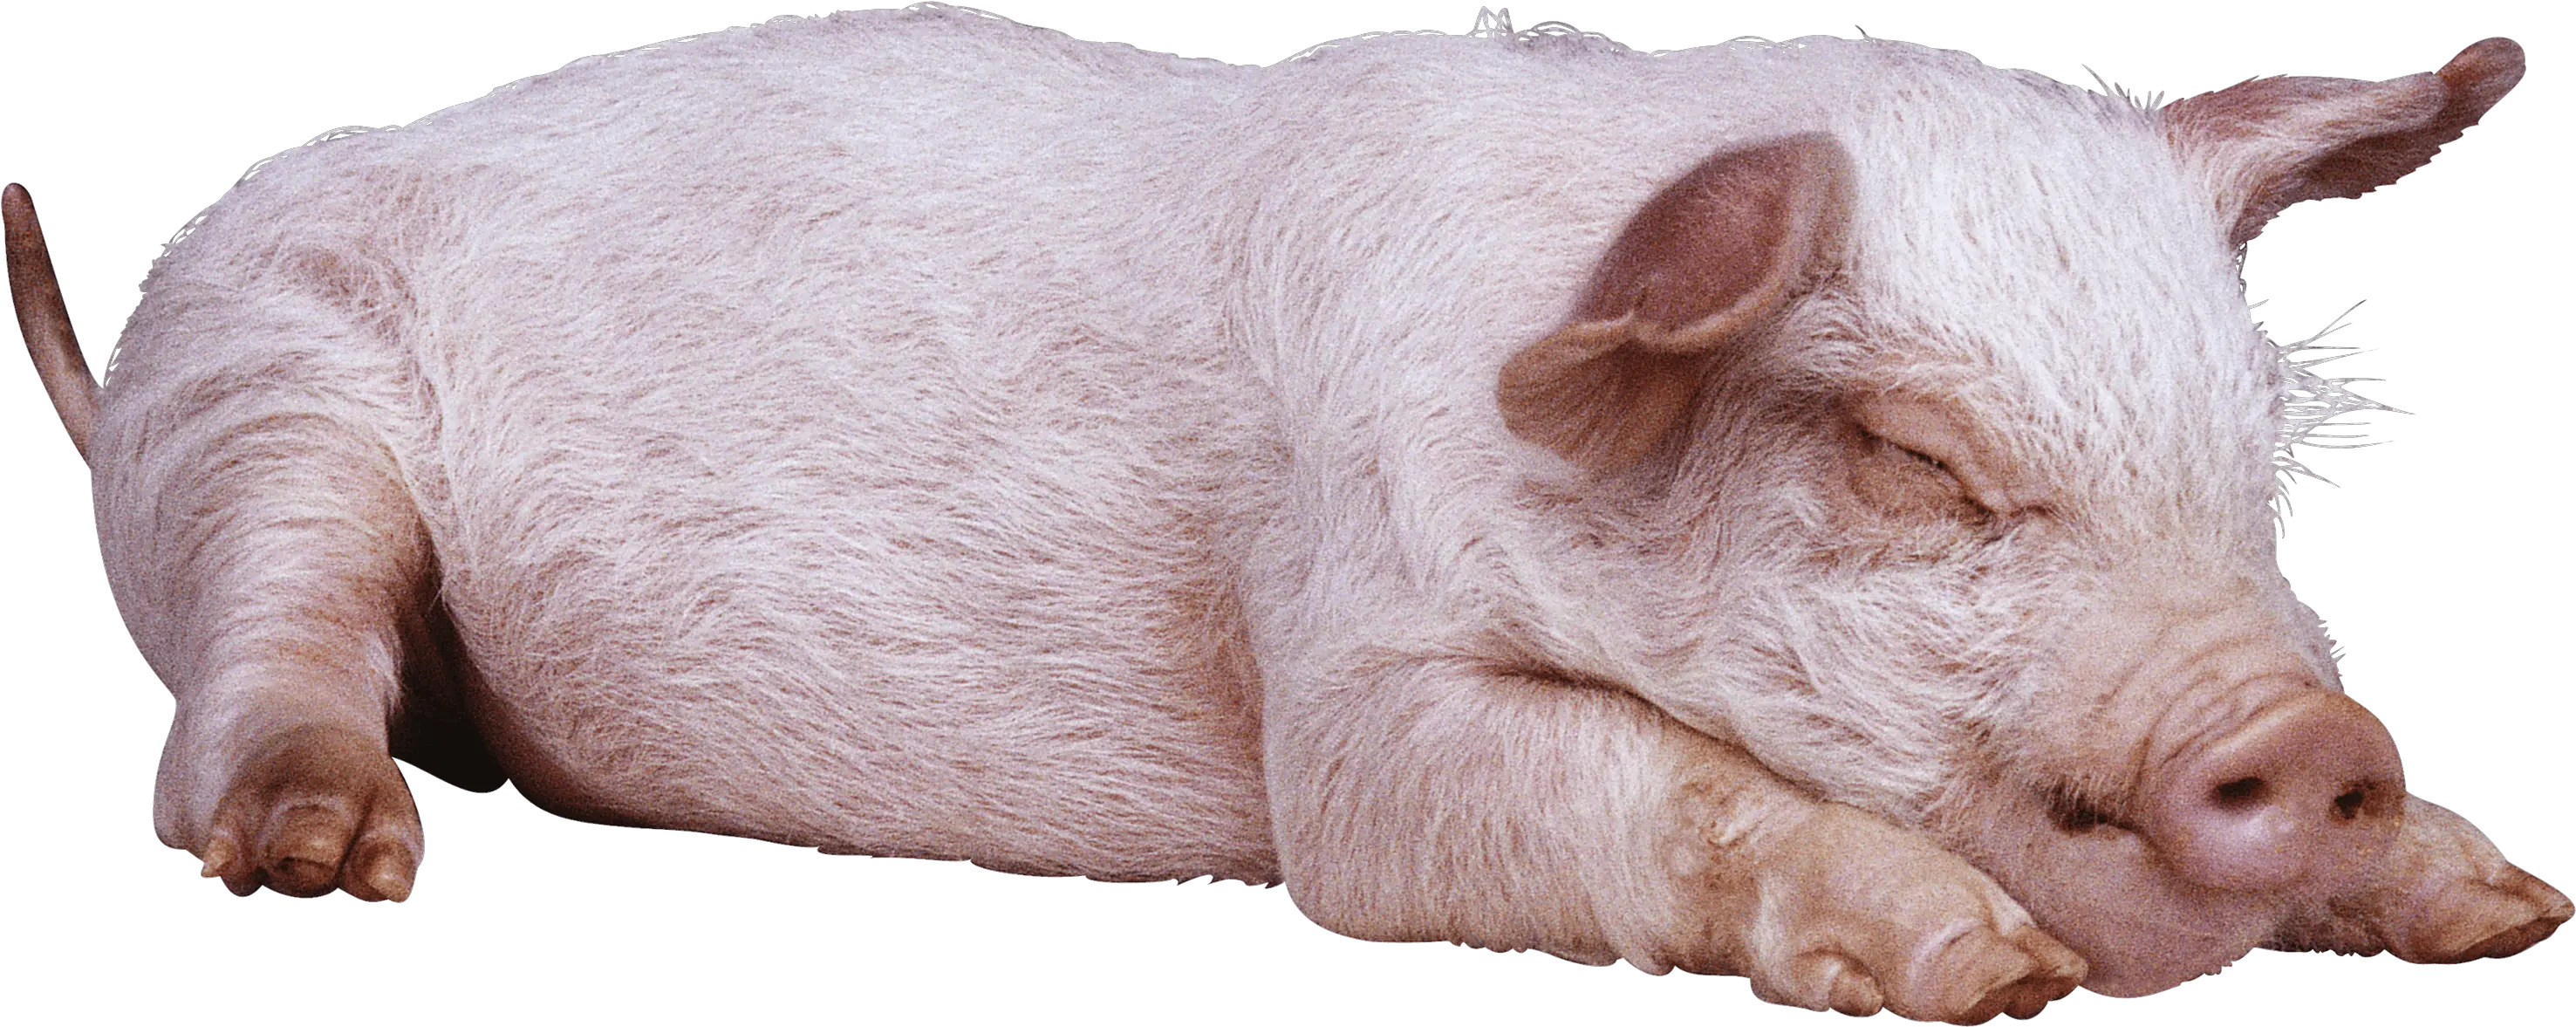 Download Sleeping Pig Png Image For Free Sleeping Pig Png Pig Png